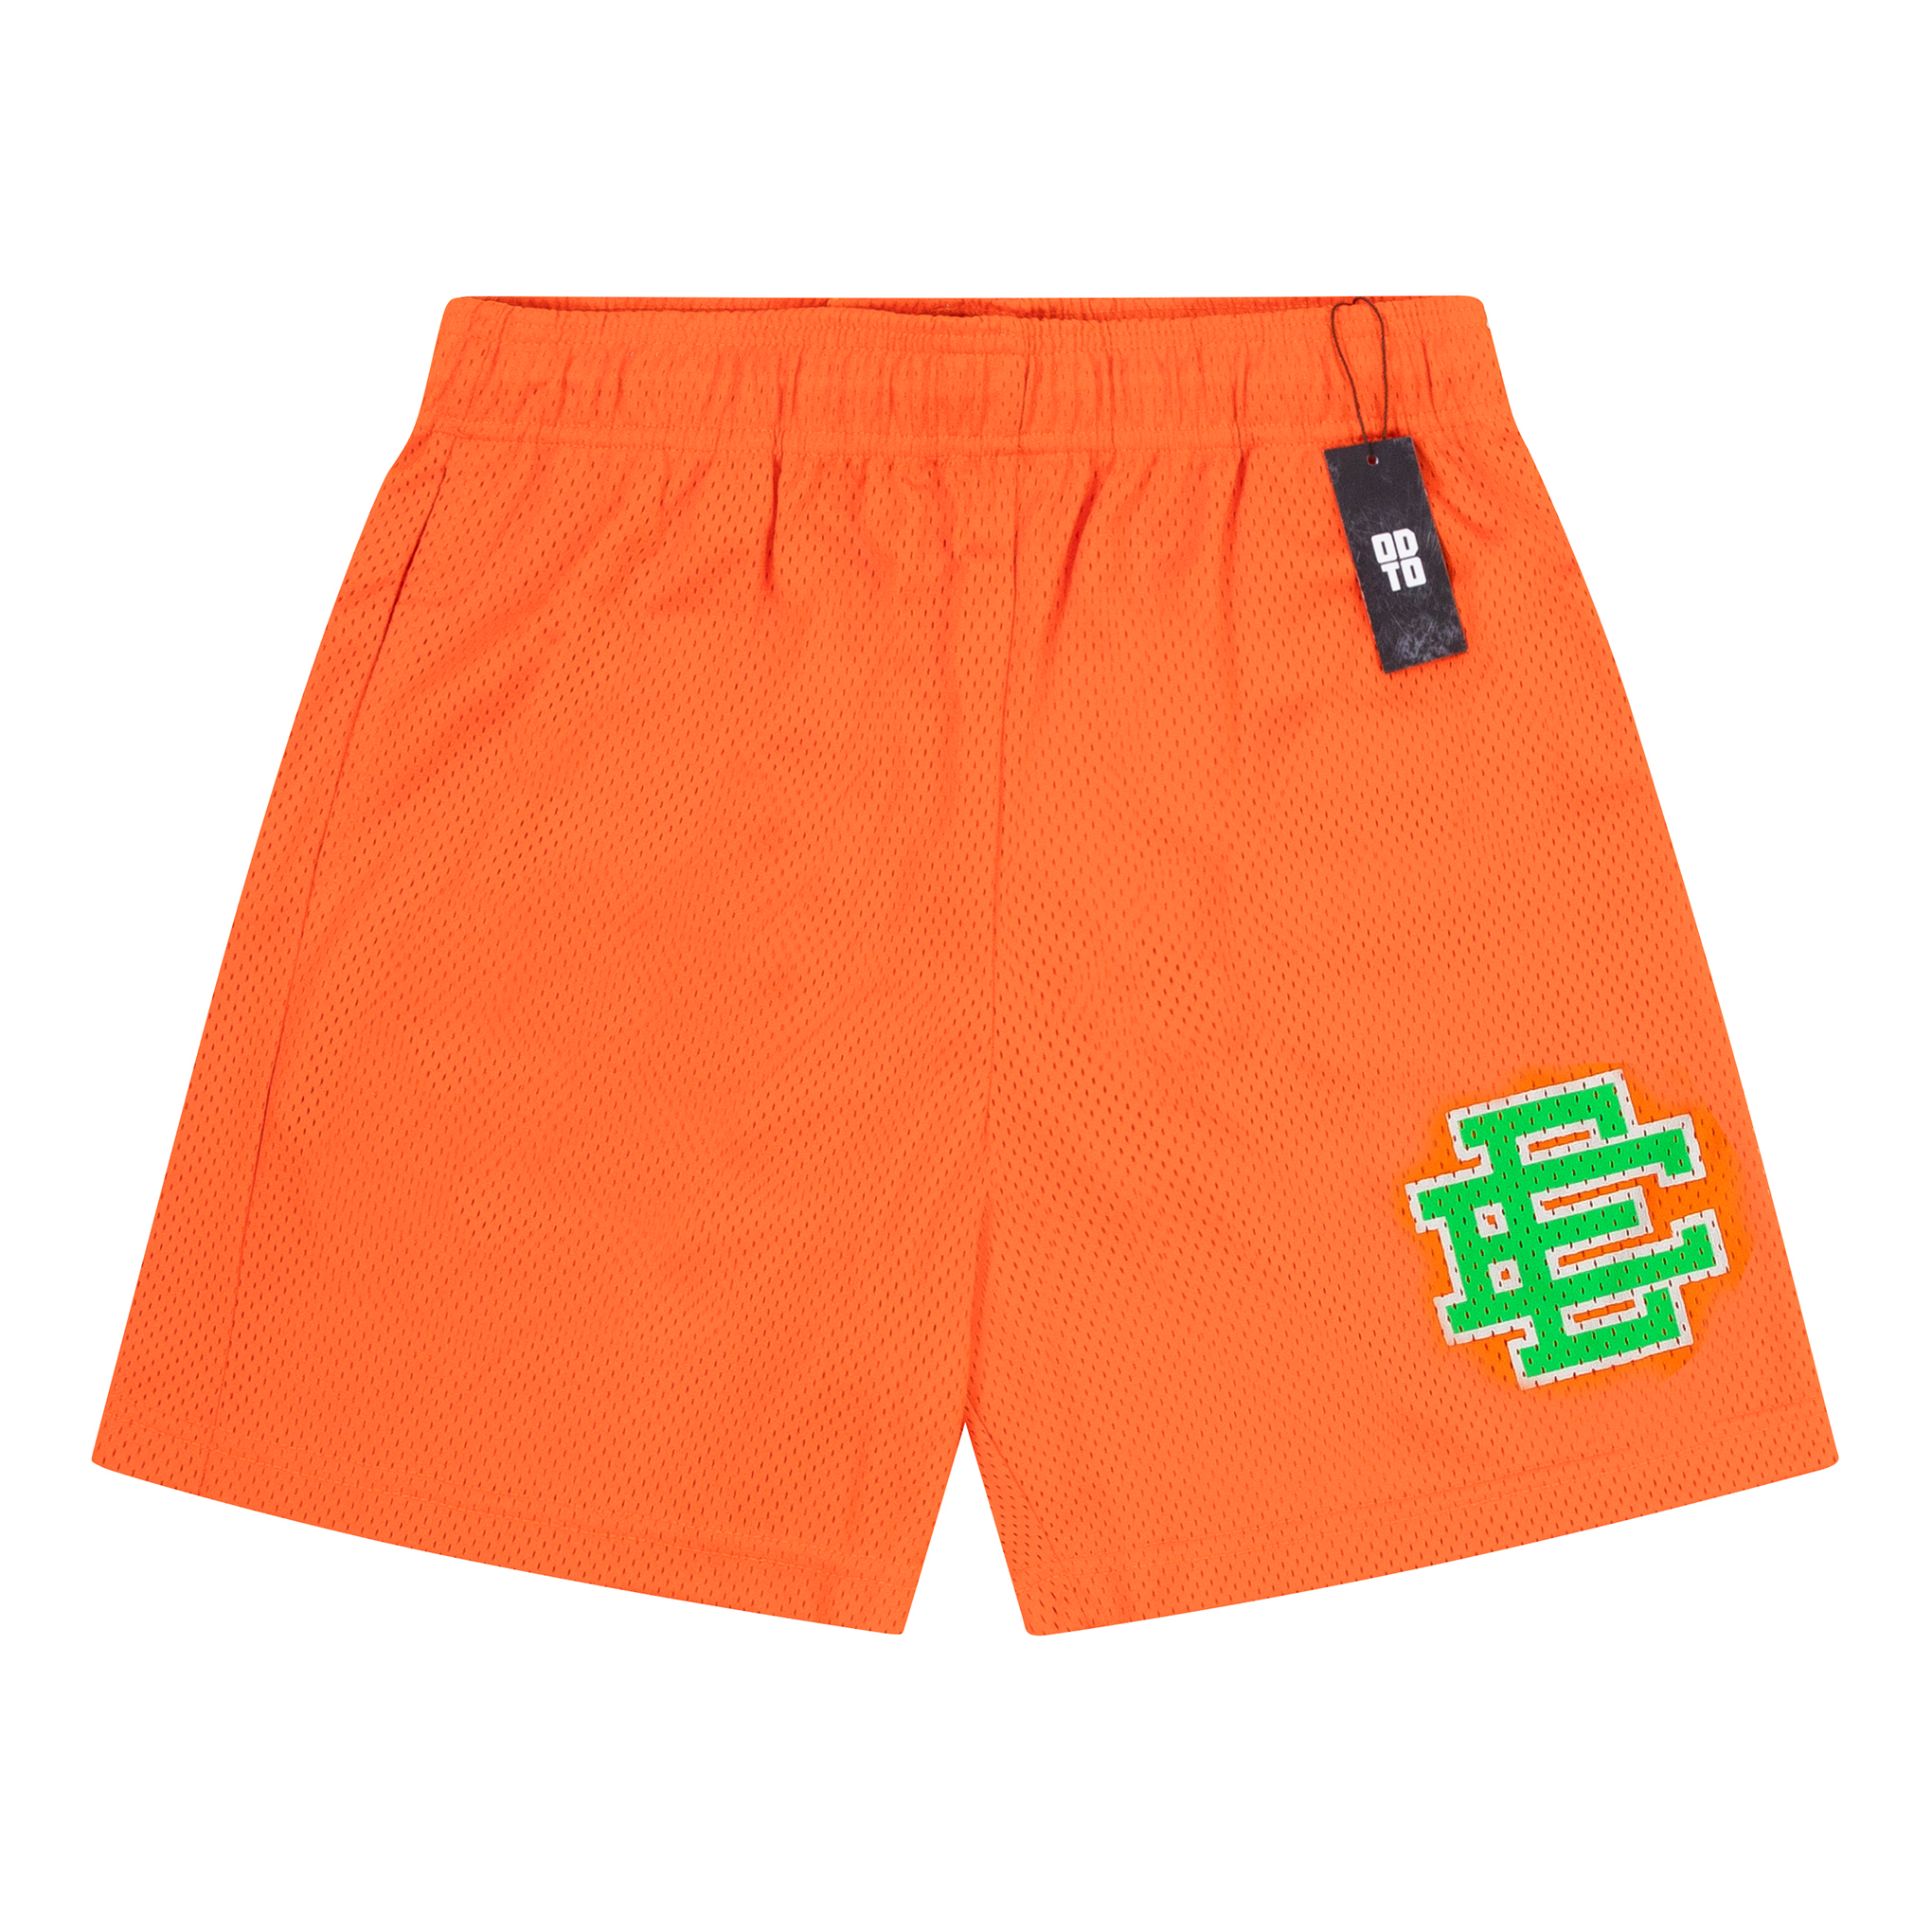 ERIC EMANUEL EE 基本款安全短裤 橙色/绿色